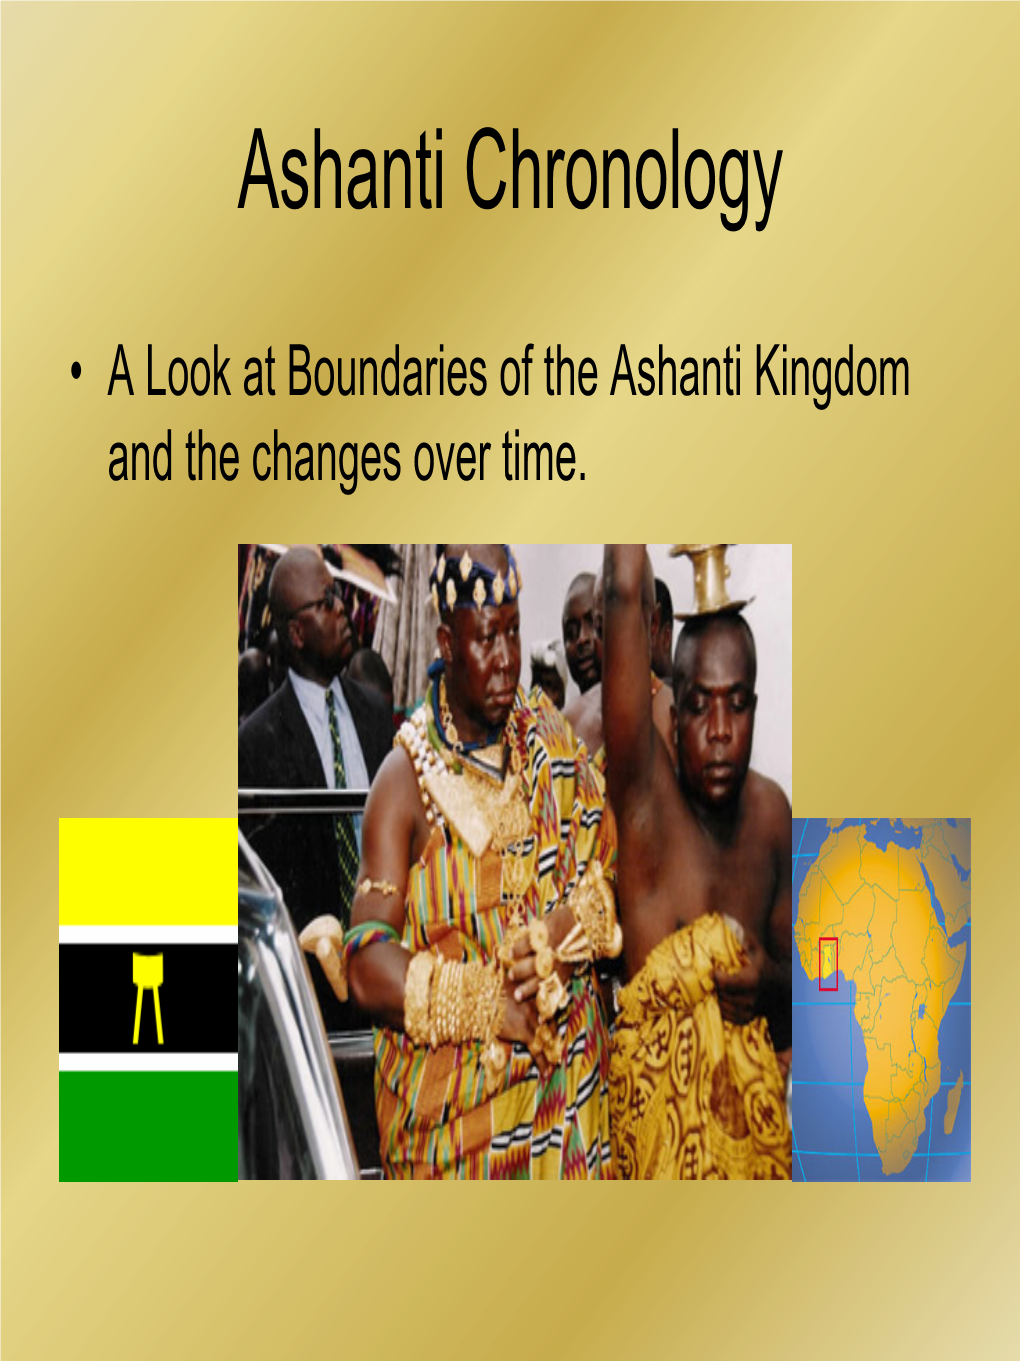 Ashanti Chronology